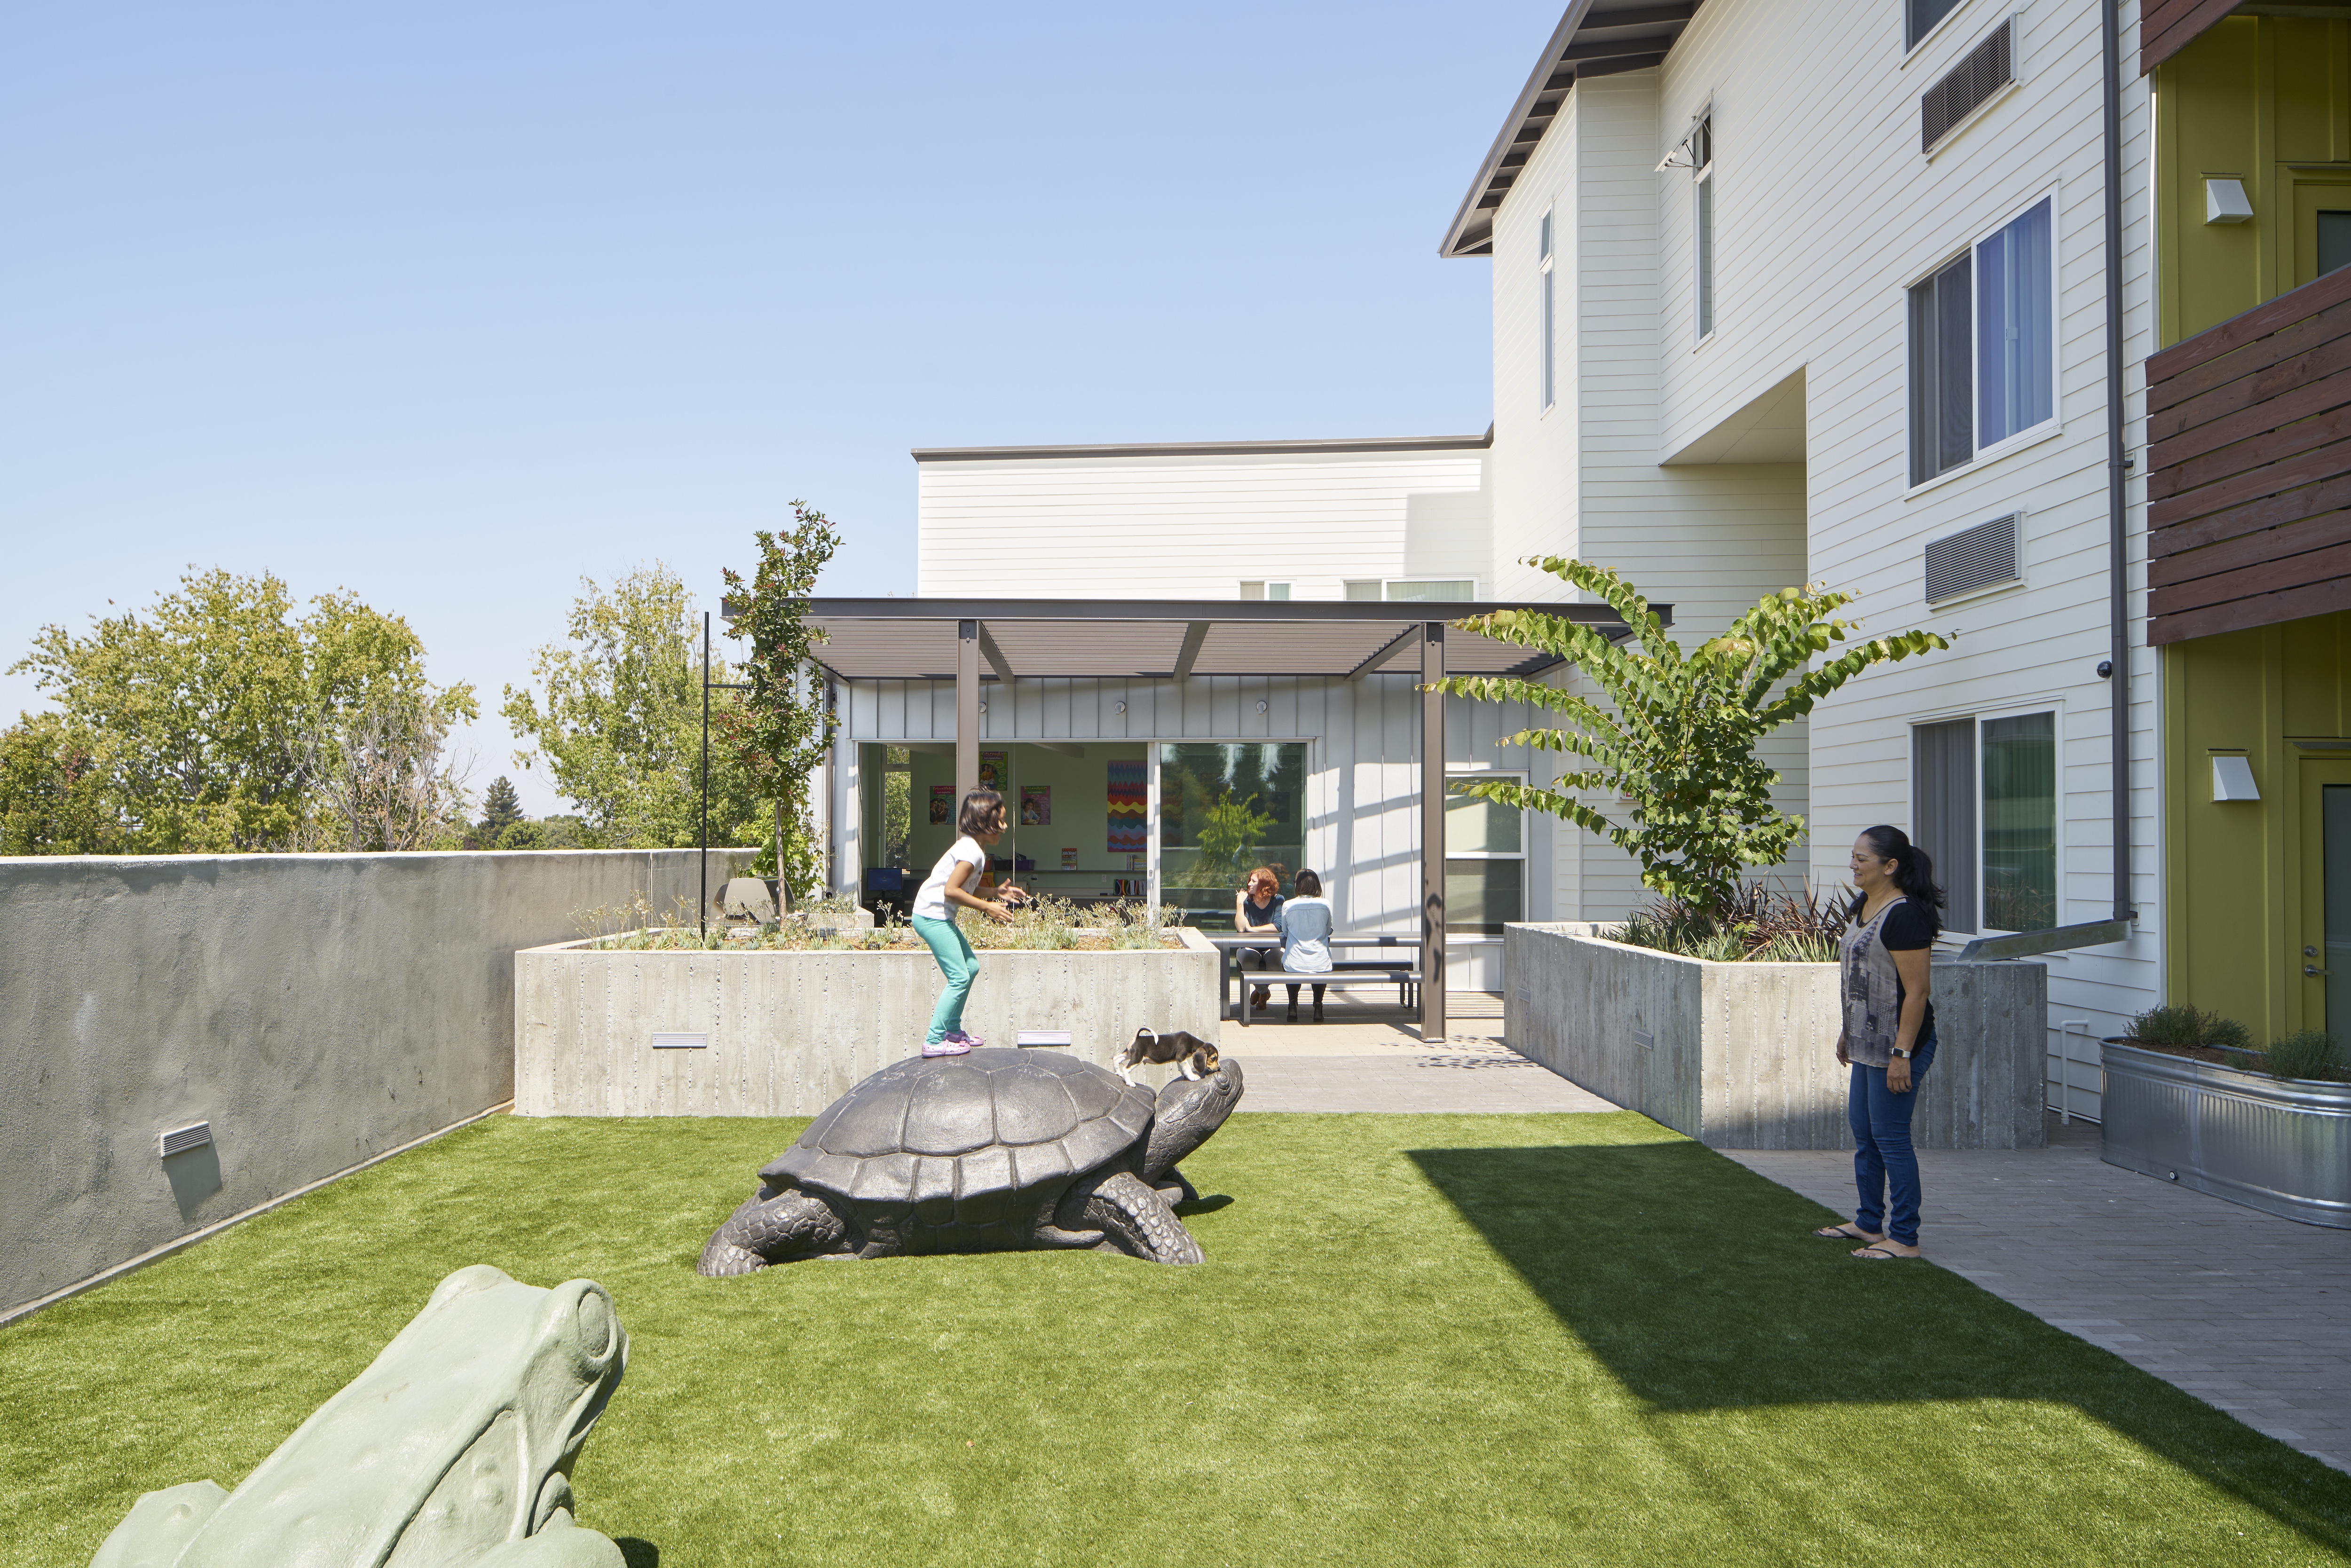 Courtyard play area in Onizuka Crossing Family Housing in Sunnyvale, California.